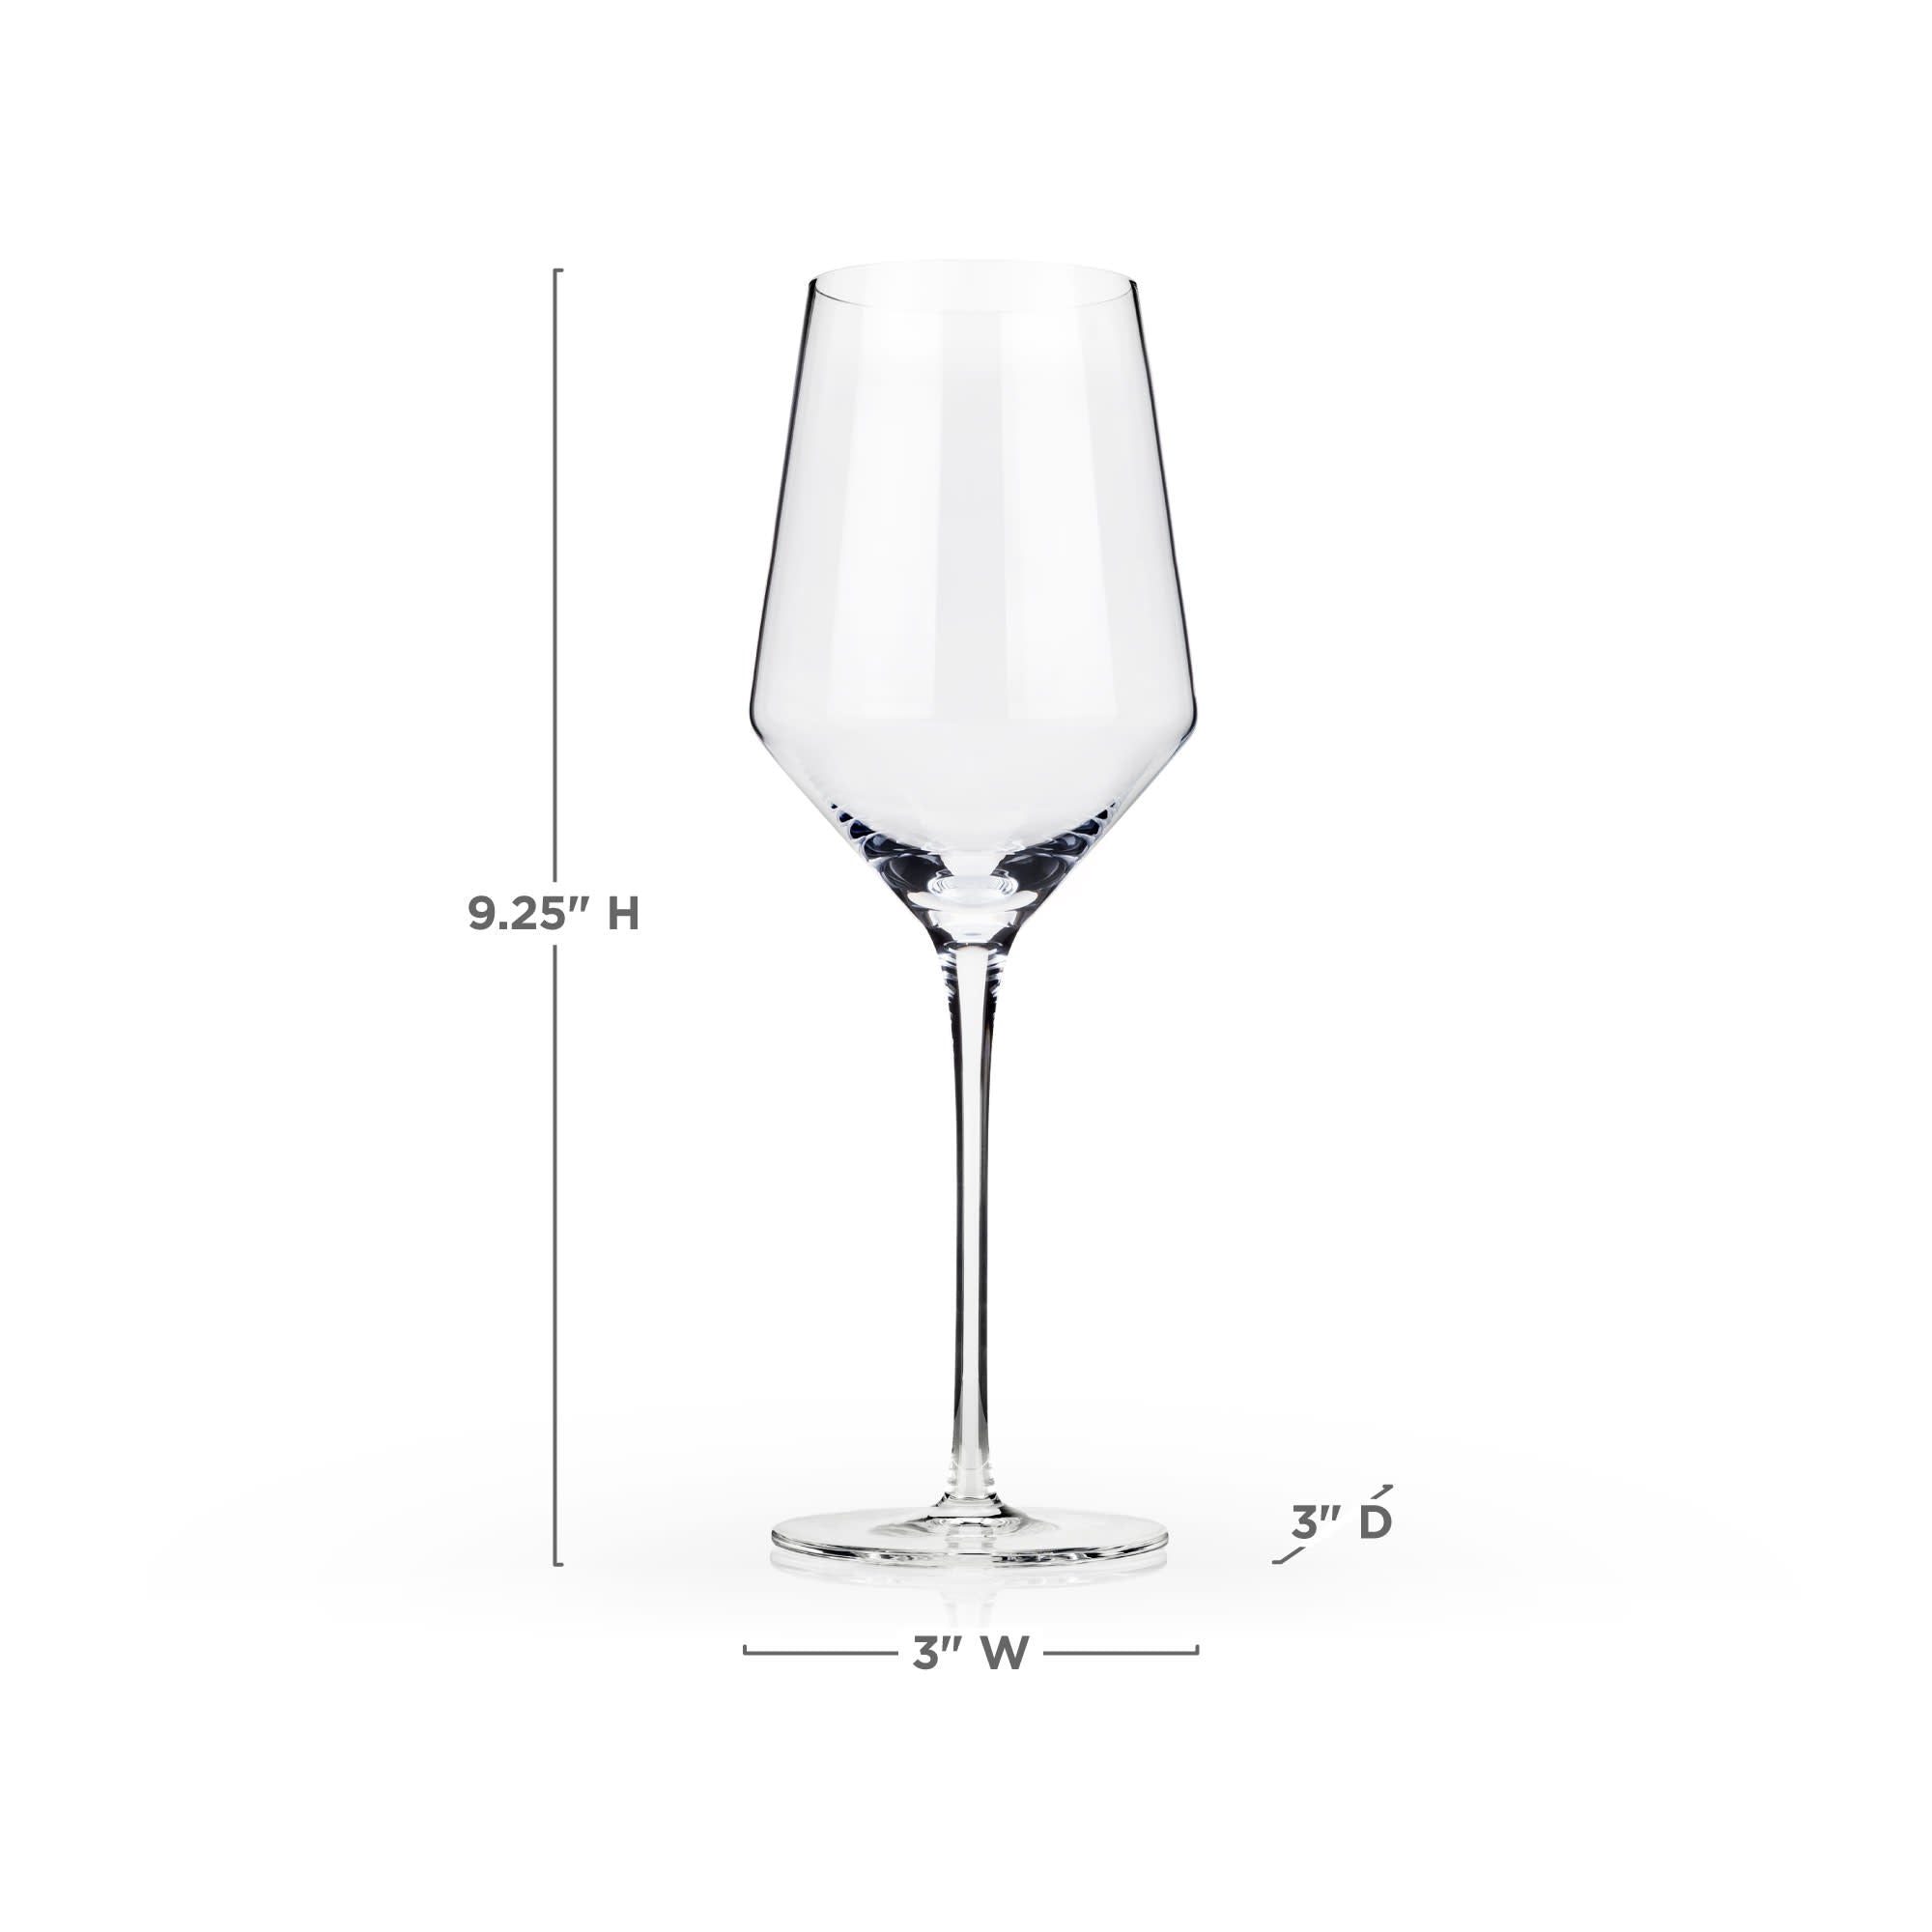 Angled Crystal Chardonnay Glasses by Viski® (4529) Drinkware Viski